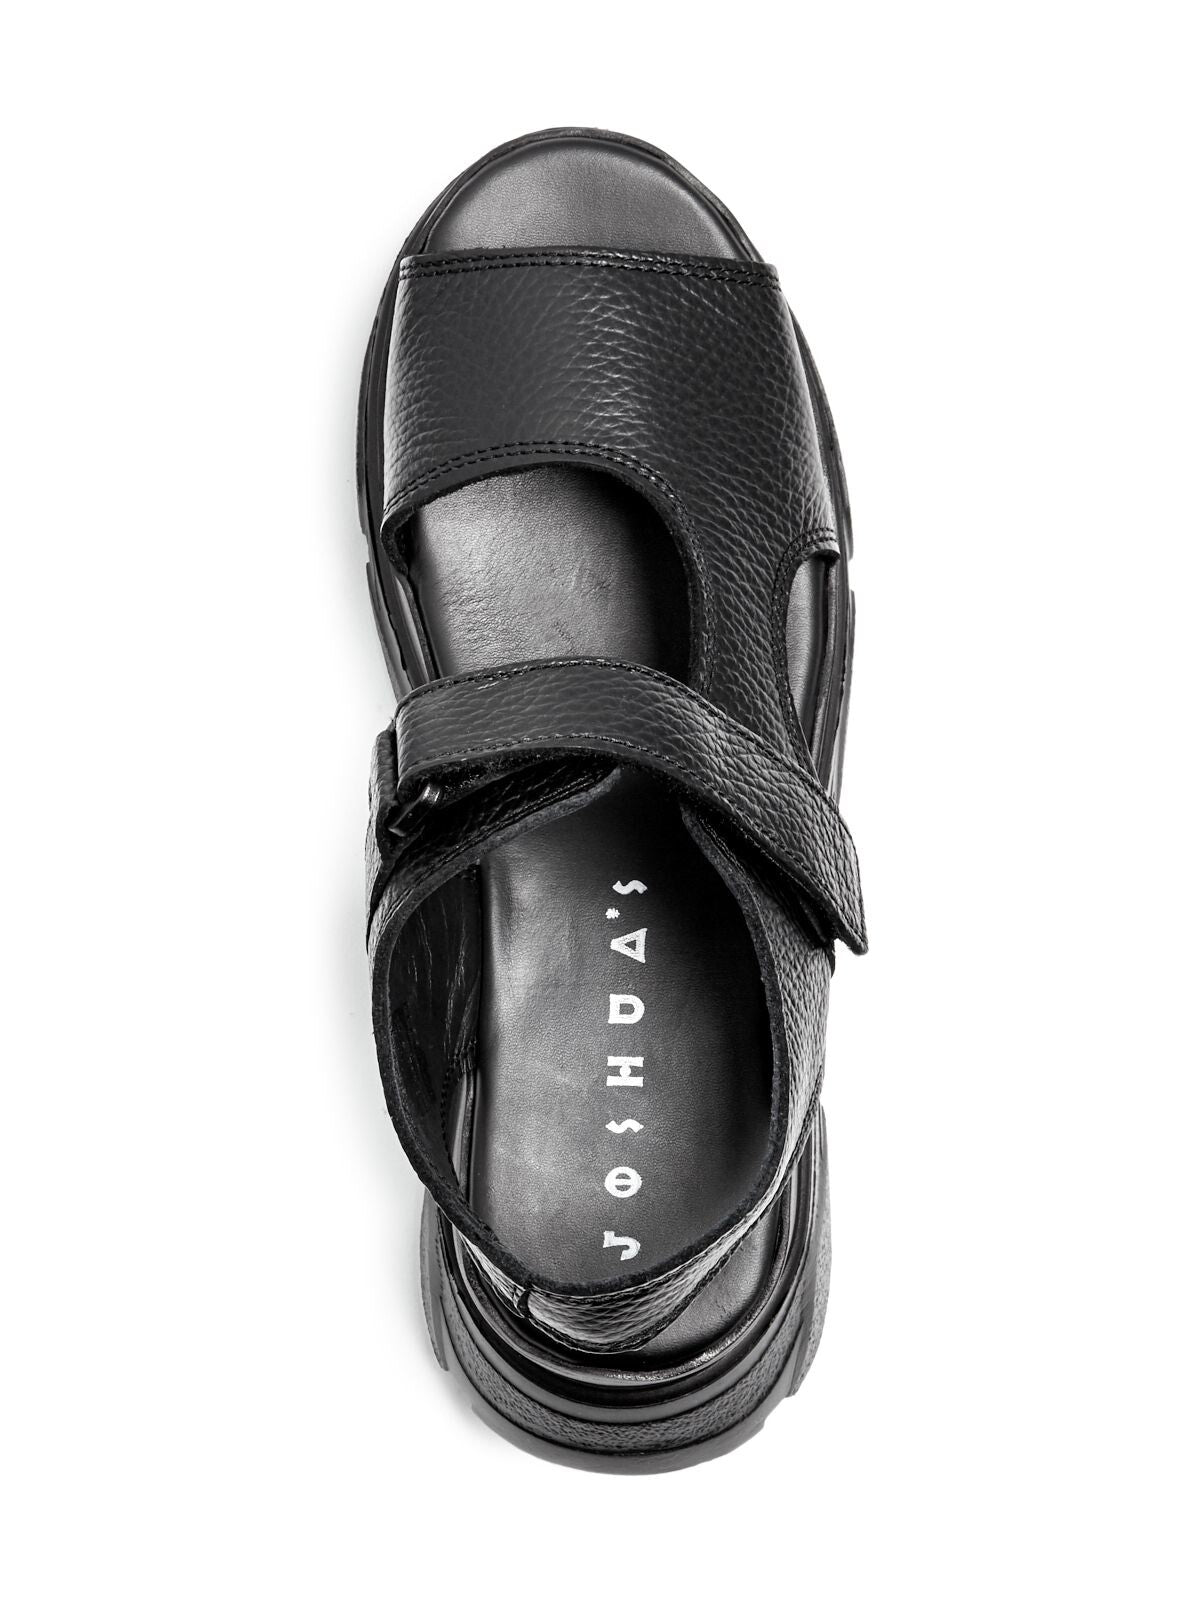 JOSHUAS Womens Black 2-1/2" Platform Asymmetrical Ankle Strap Spice Open Toe Wedge Leather Sandals Shoes 41